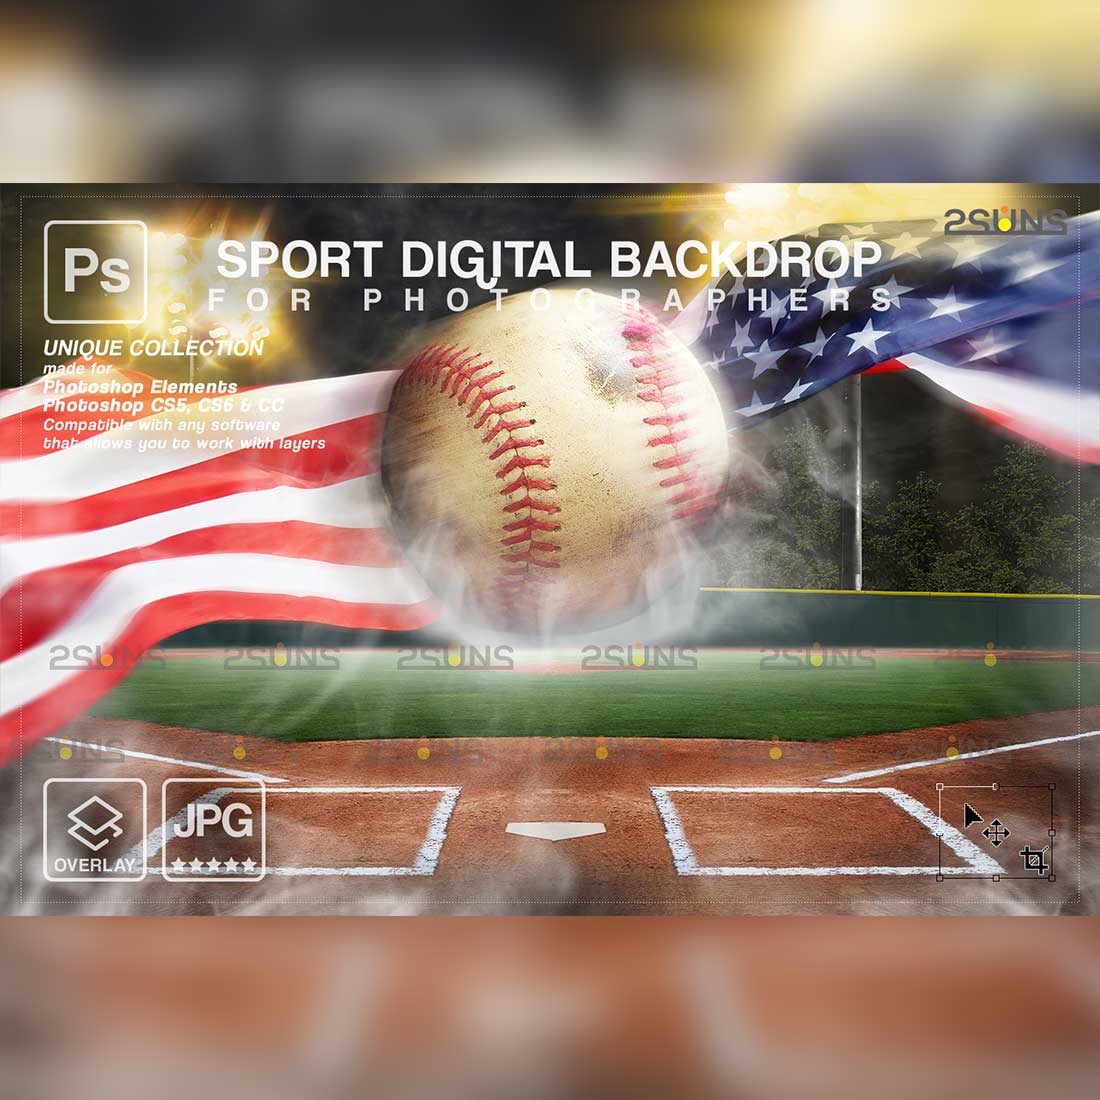 Baseball American Flag Backdrop Sports Digital Photoshop Overlay Preview Image.